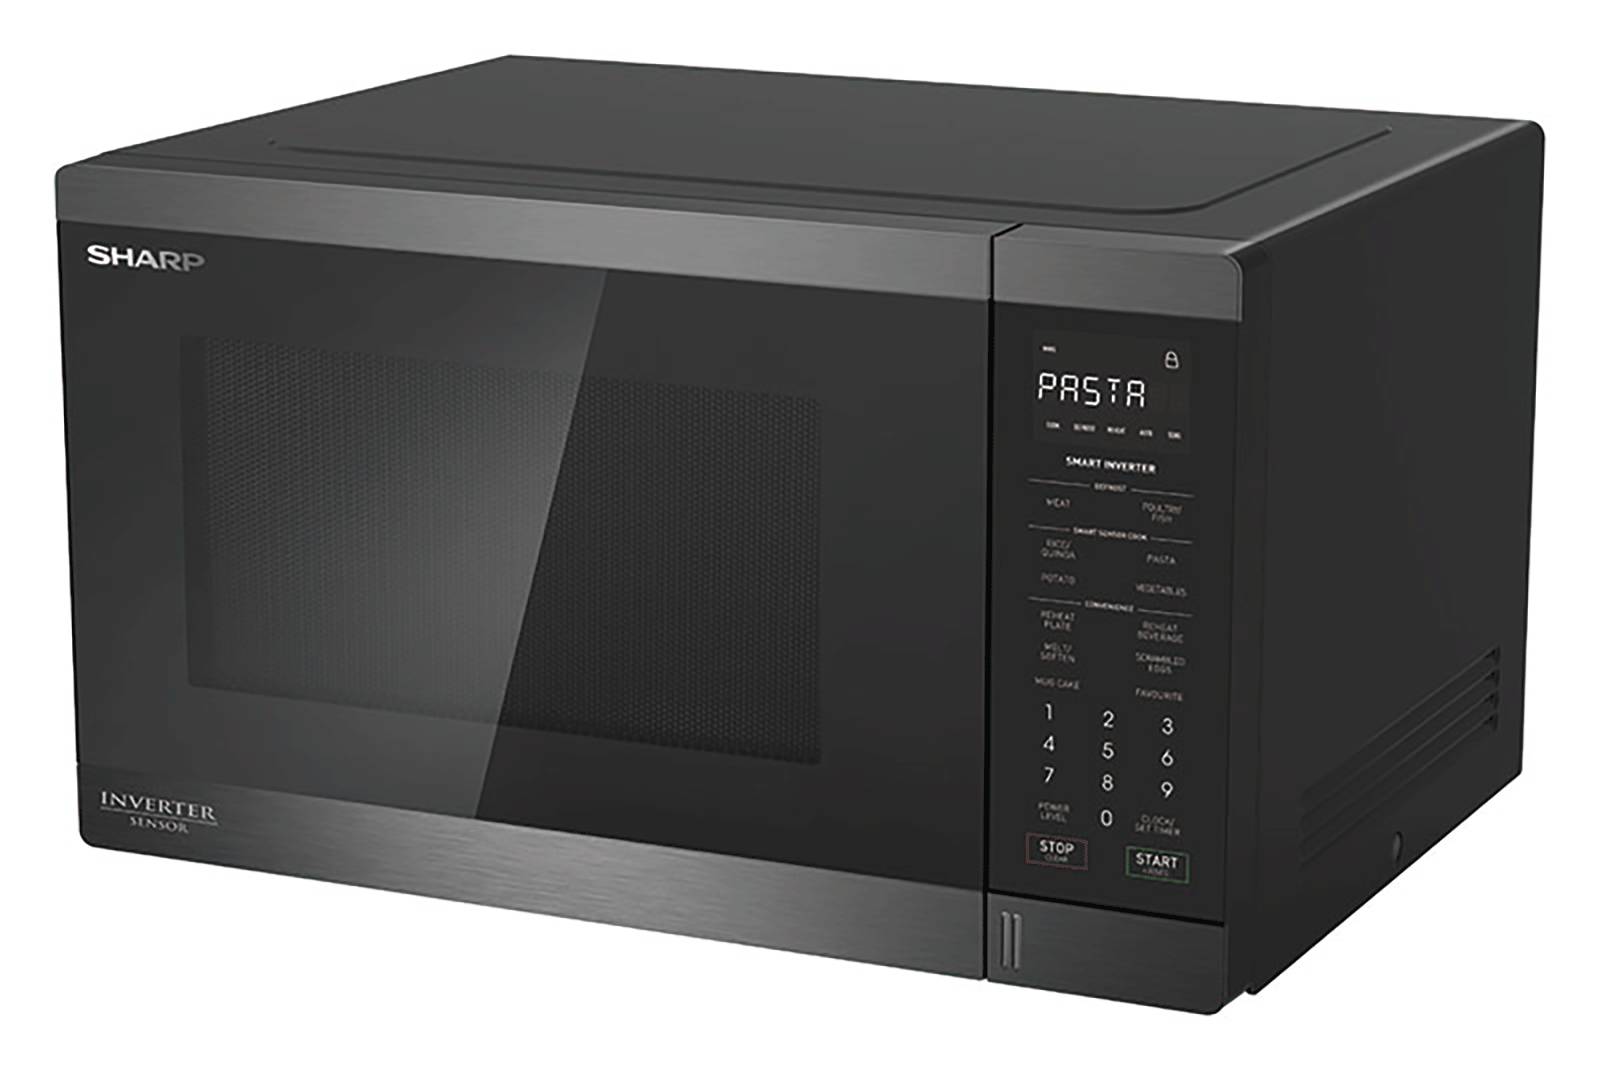 Midsized Microwave - Black Stainless - 1200W 